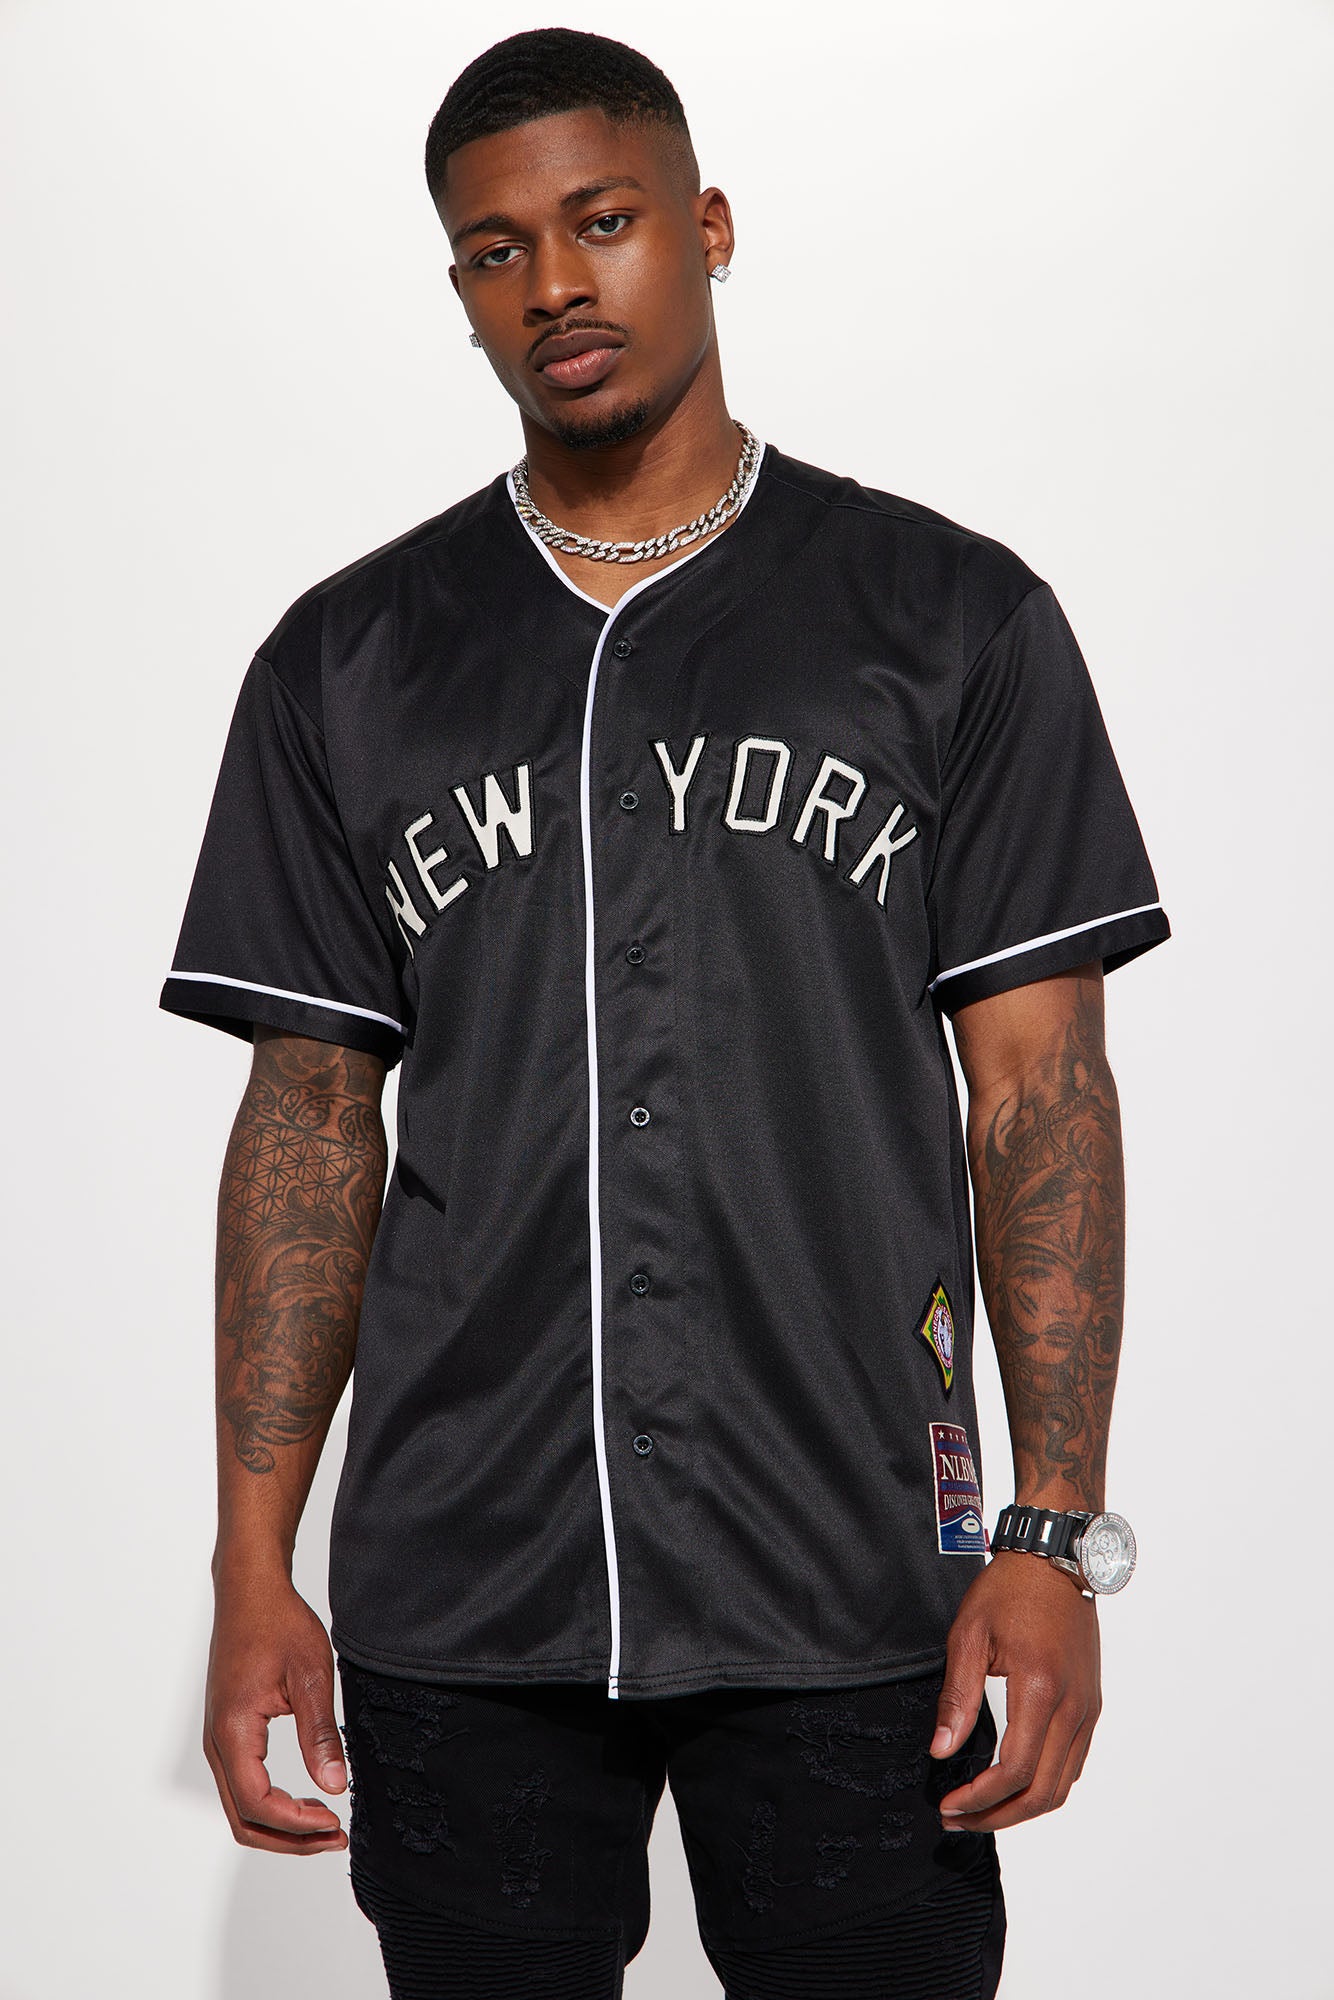 vintage black yankees NLBM baseball jersey